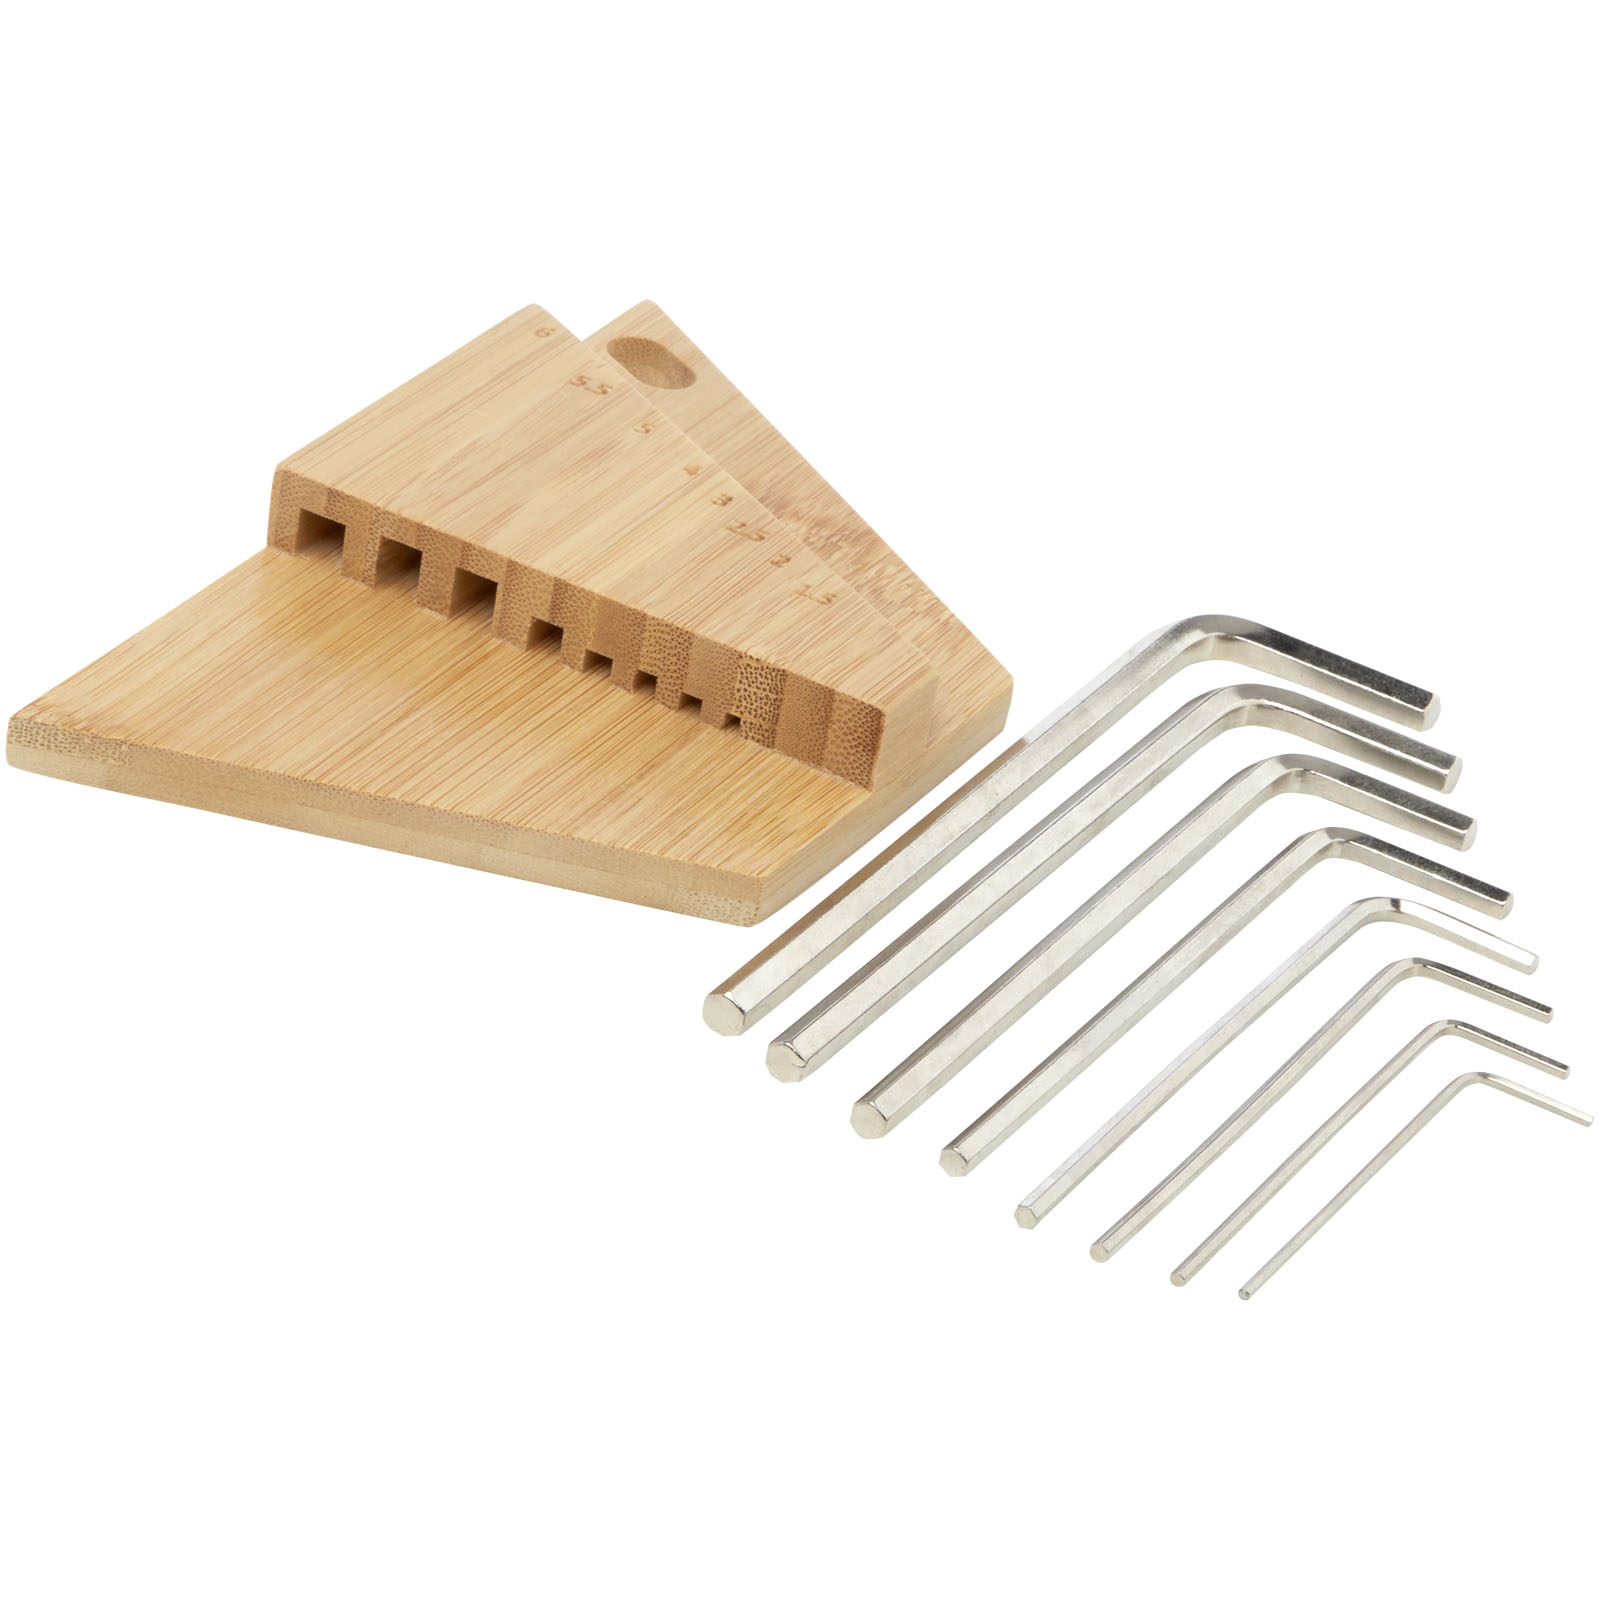 Advertising Tool sets - Allen bamboo hex key tool set - 4